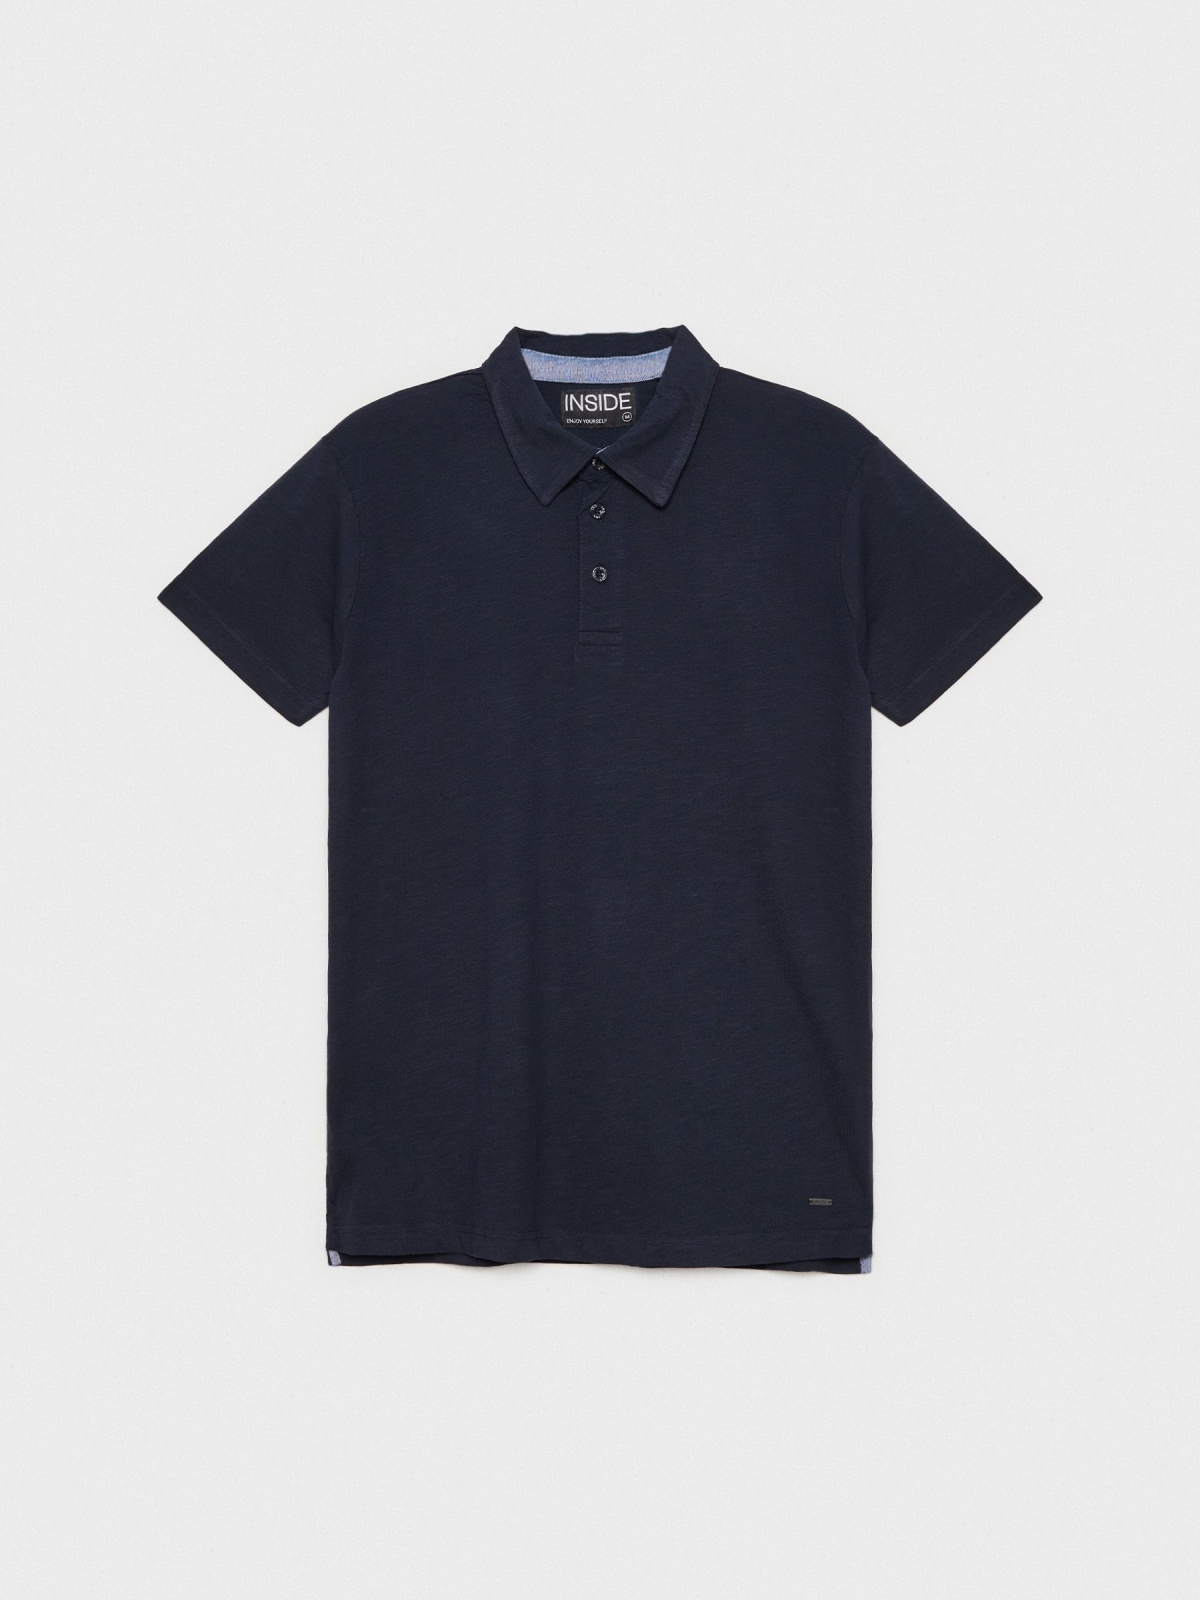  Basic polo shirt classic collar navy